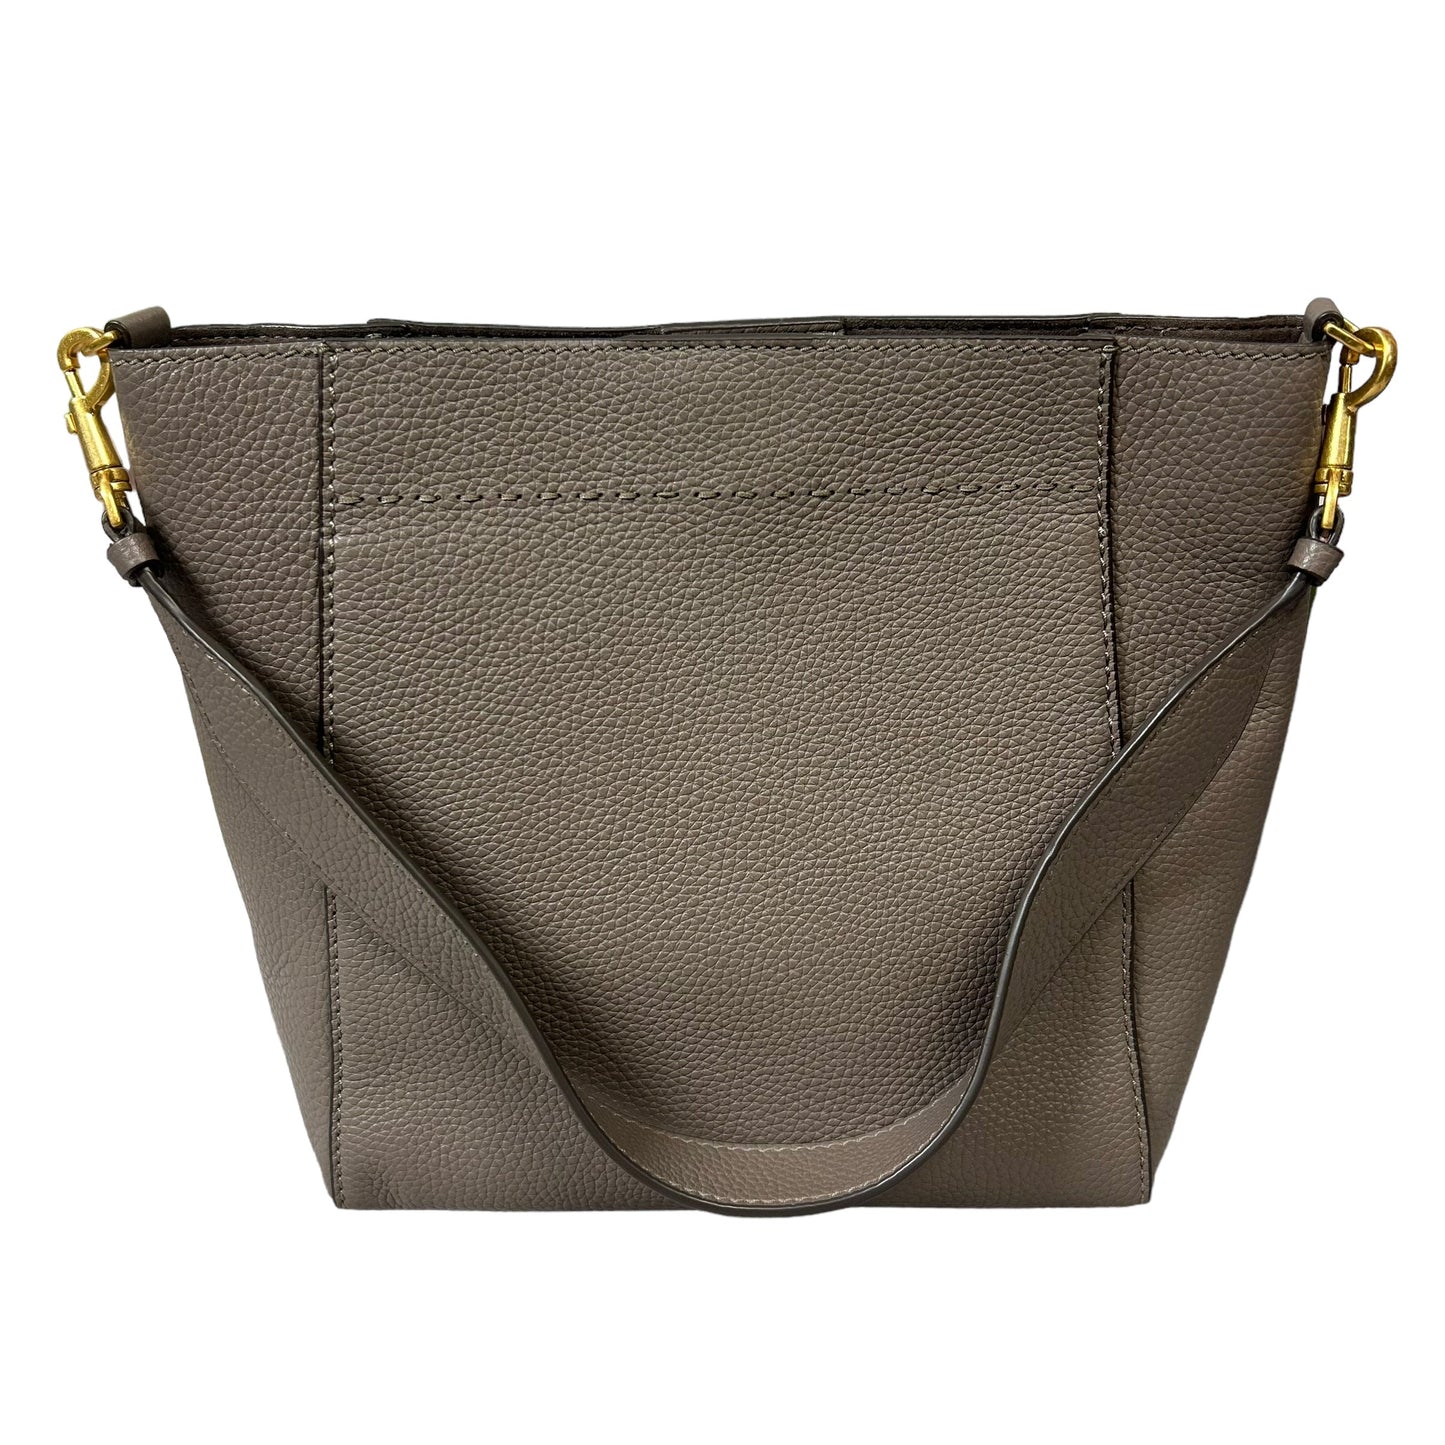 Handbag Designer Tory Burch, Size Medium